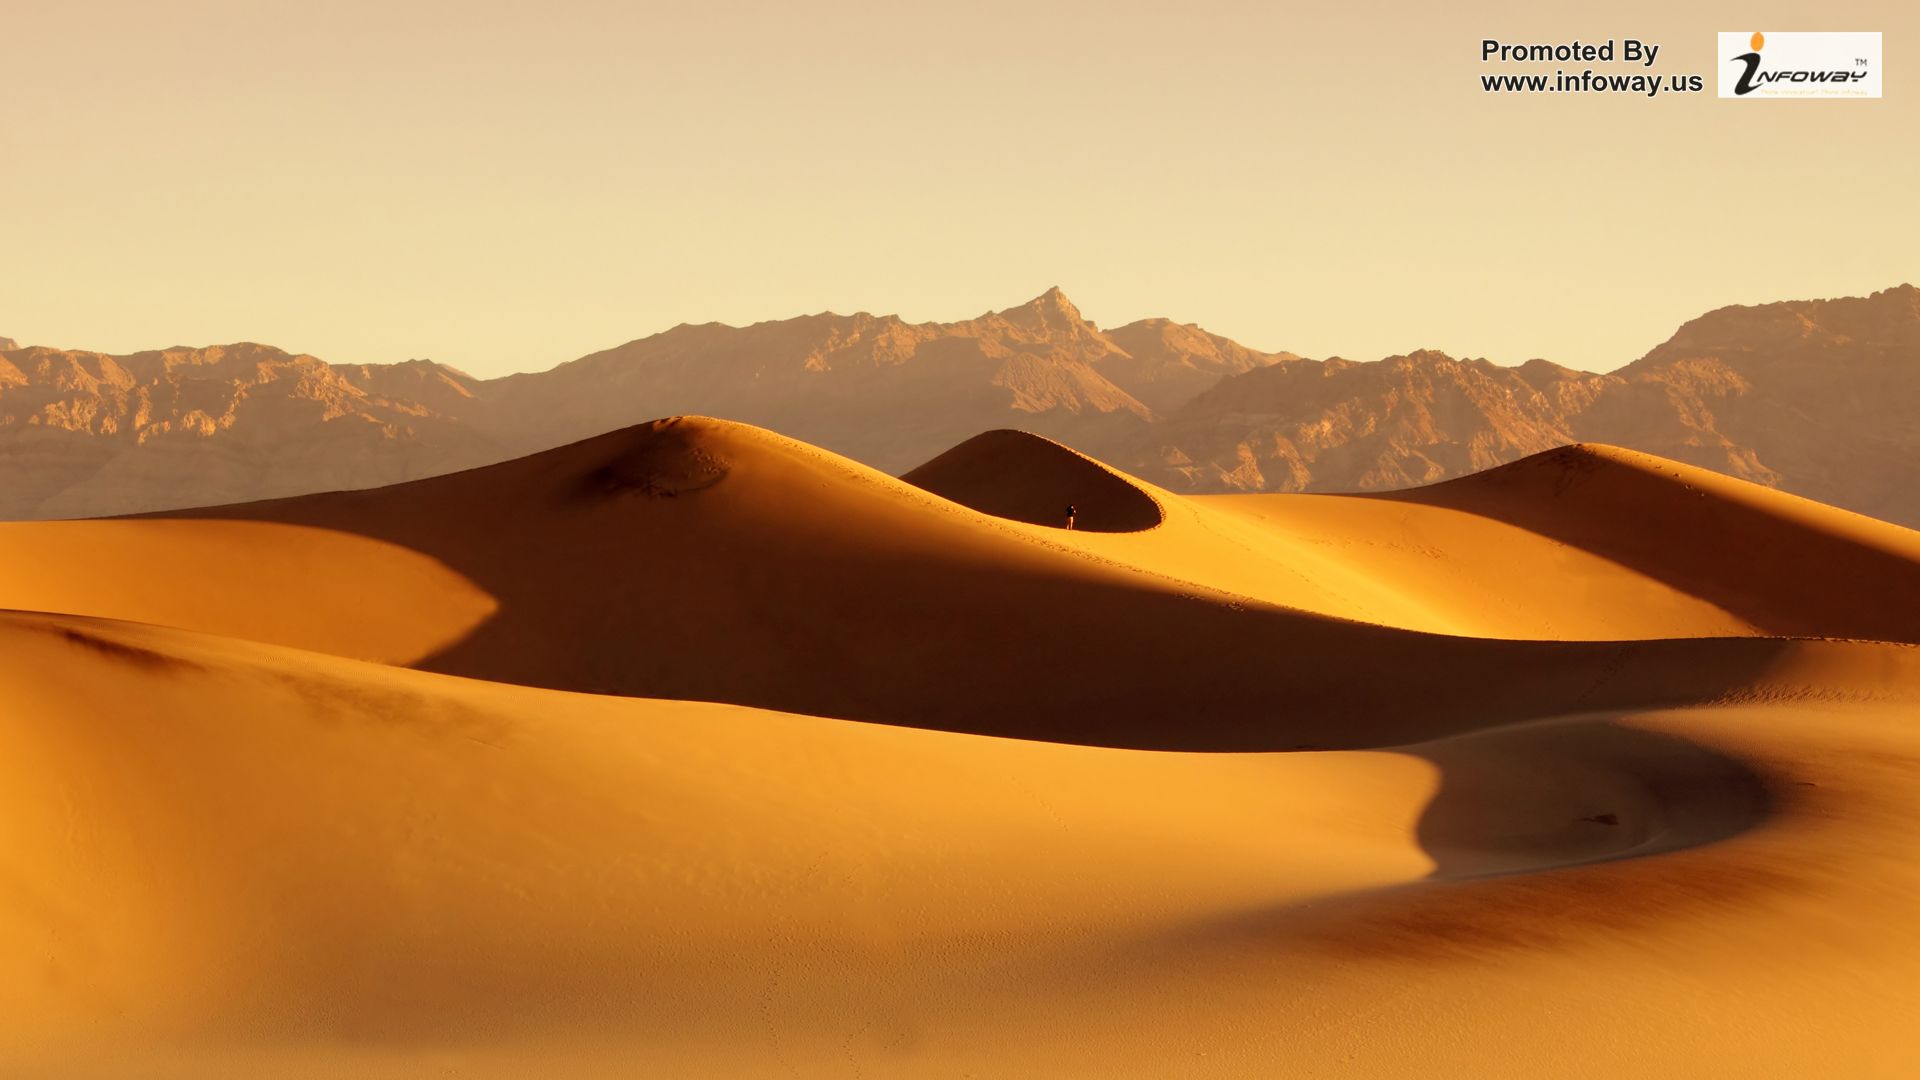 Sahara Desert Sand Dunes   Photo 71 of 391 phombocom